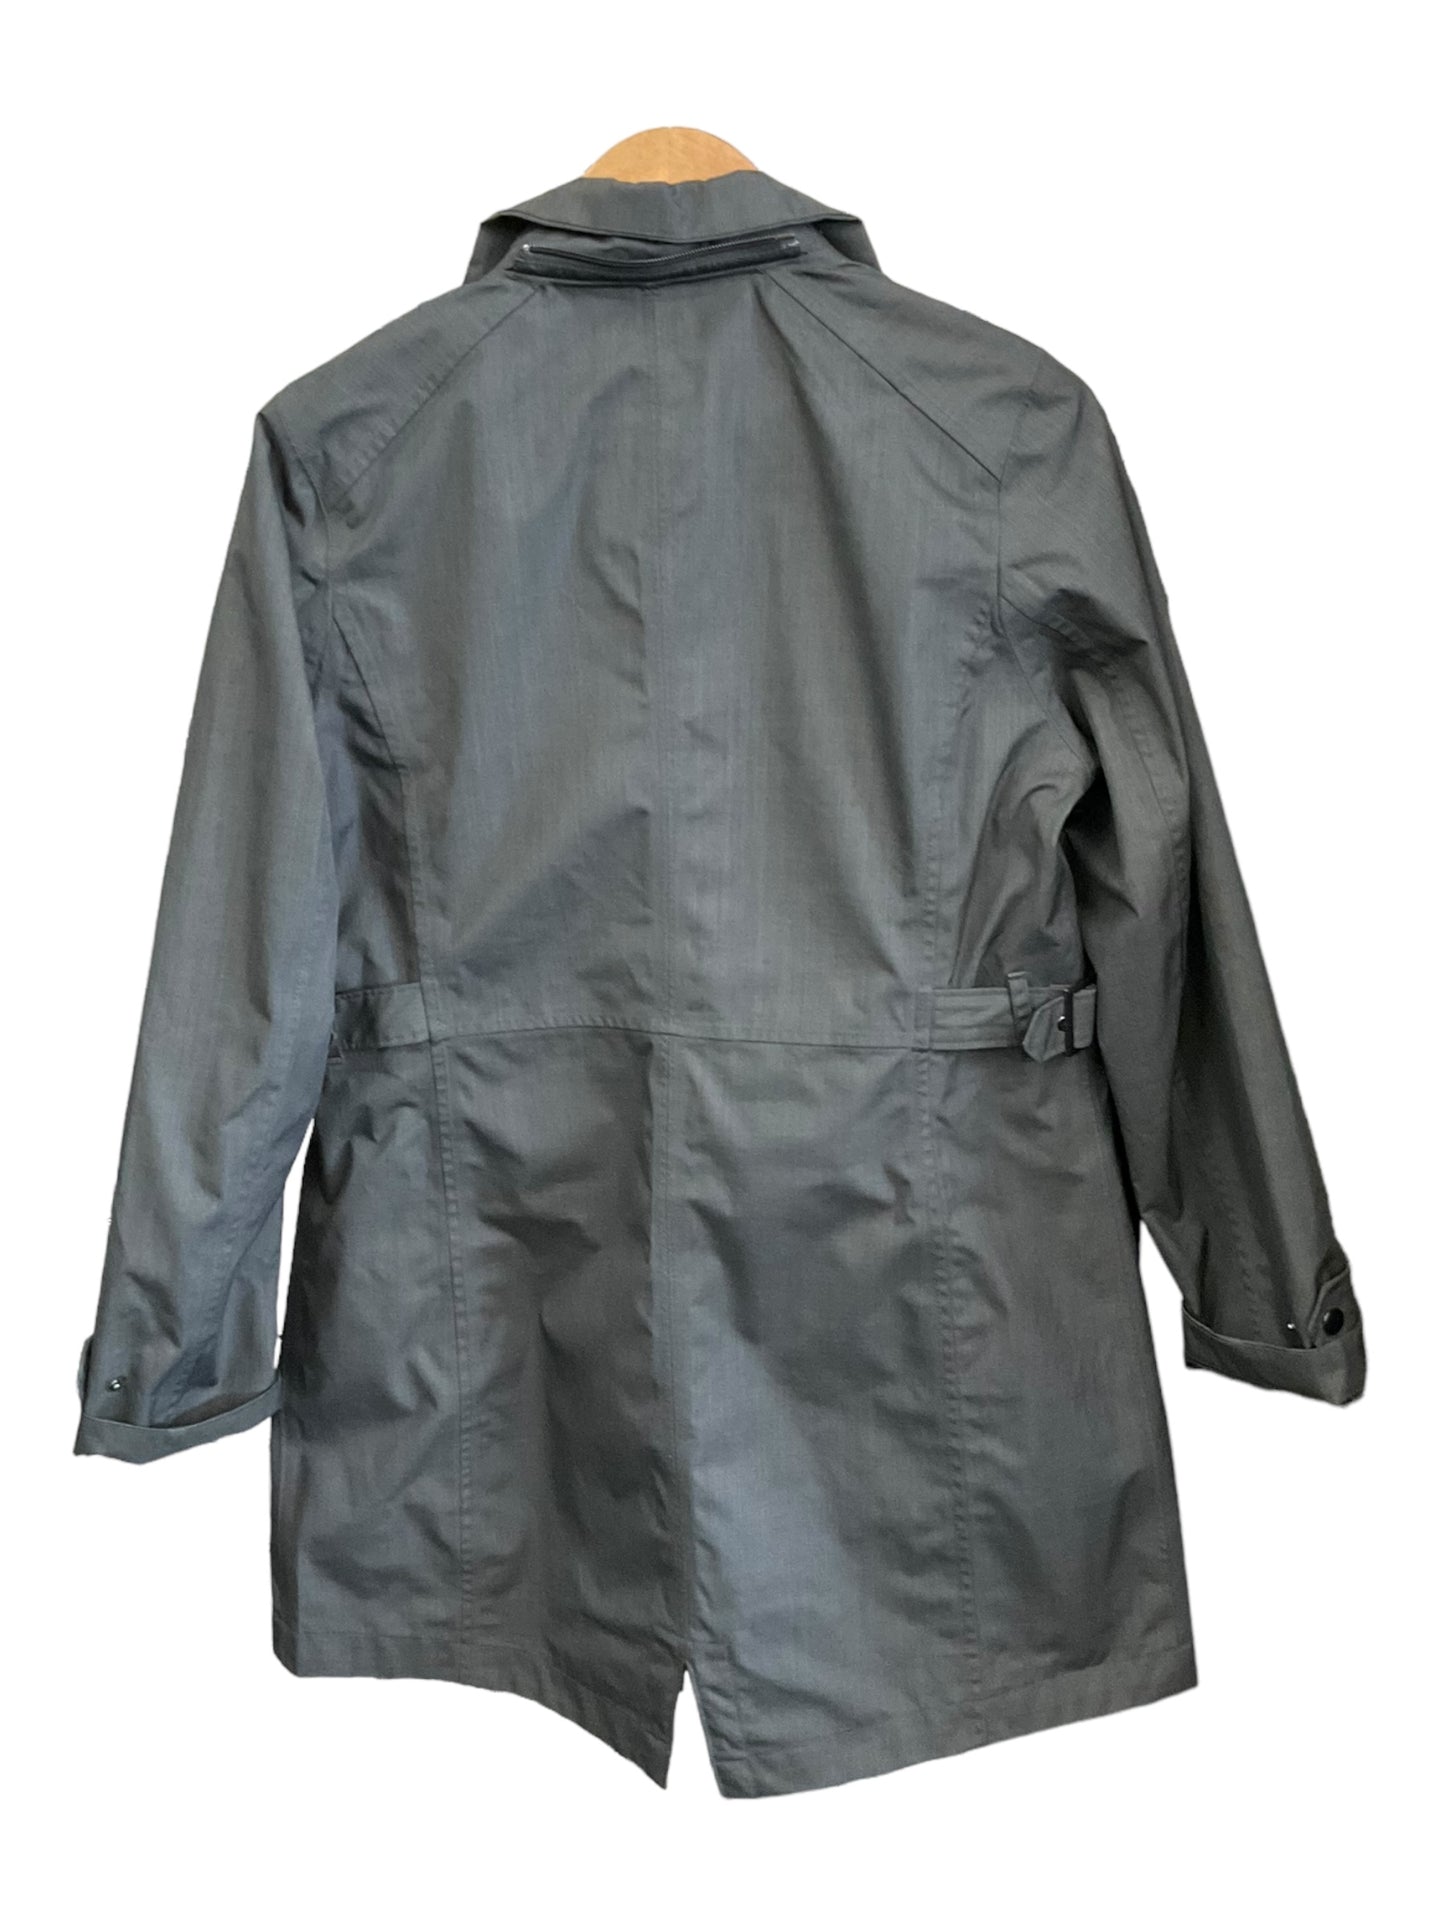 Jacket Utility By Kirkland  Size: S